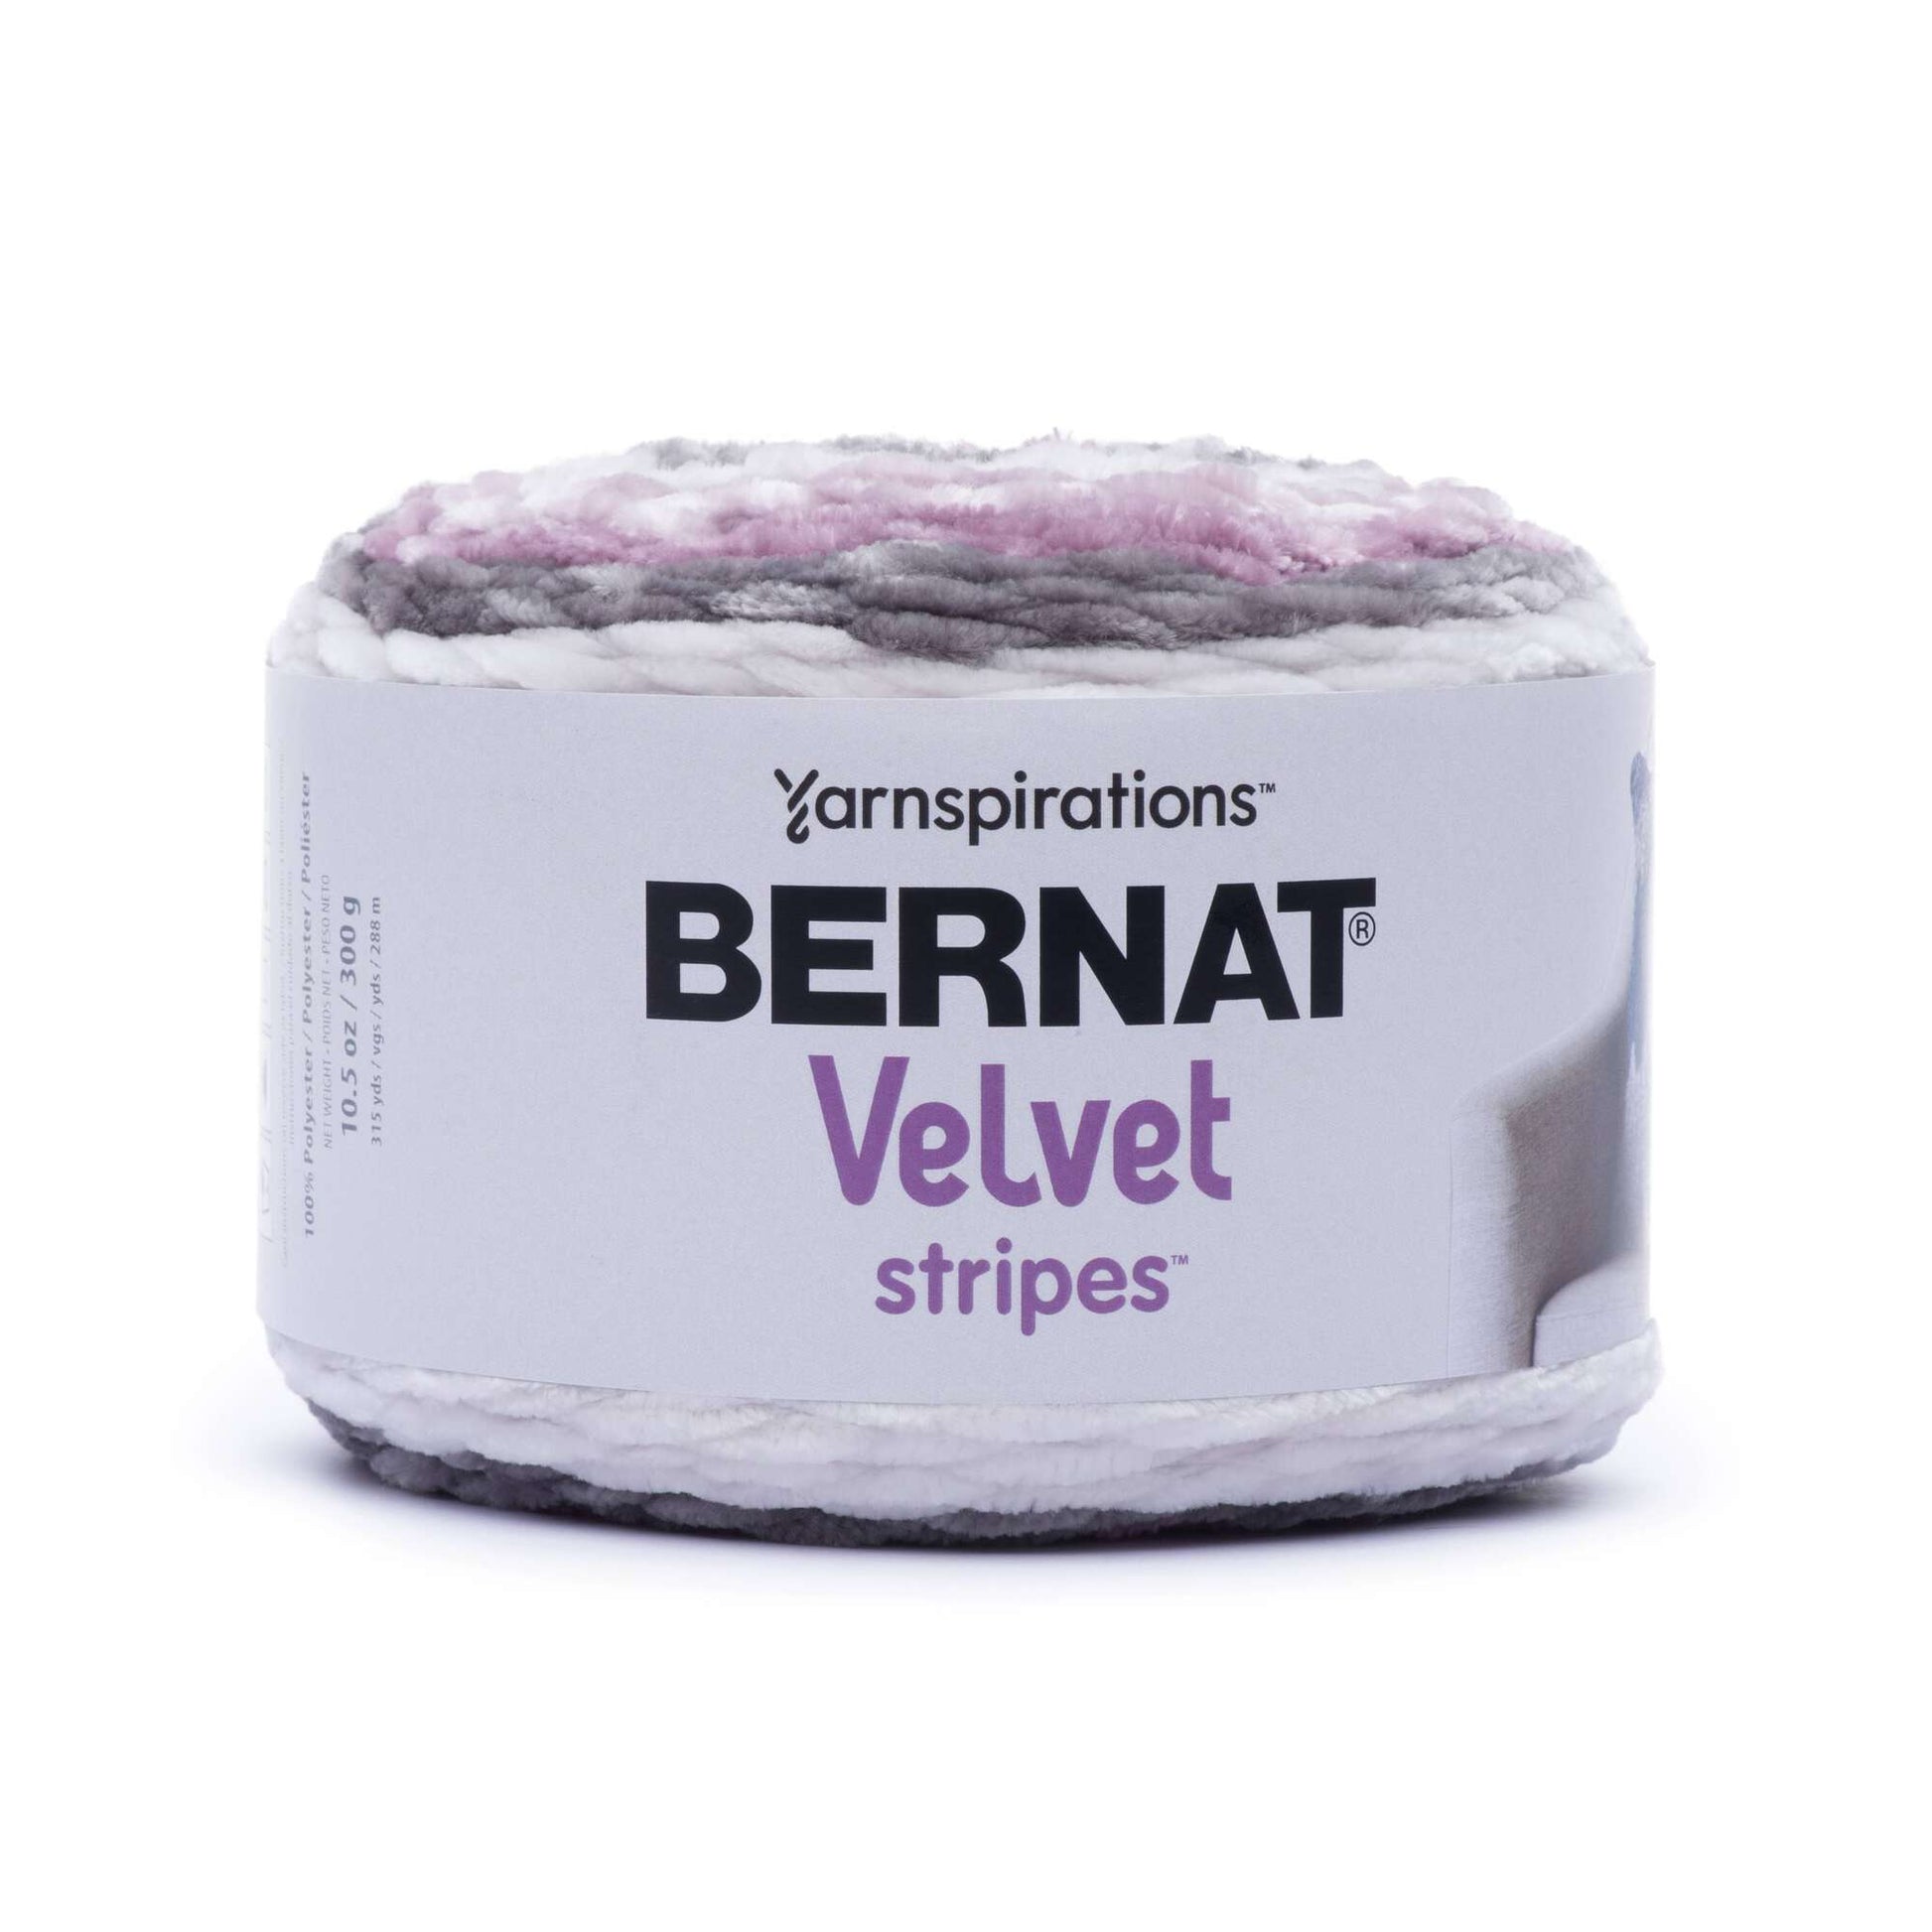 Bernat Velvet Stripes Yarn - Discontinued Shades